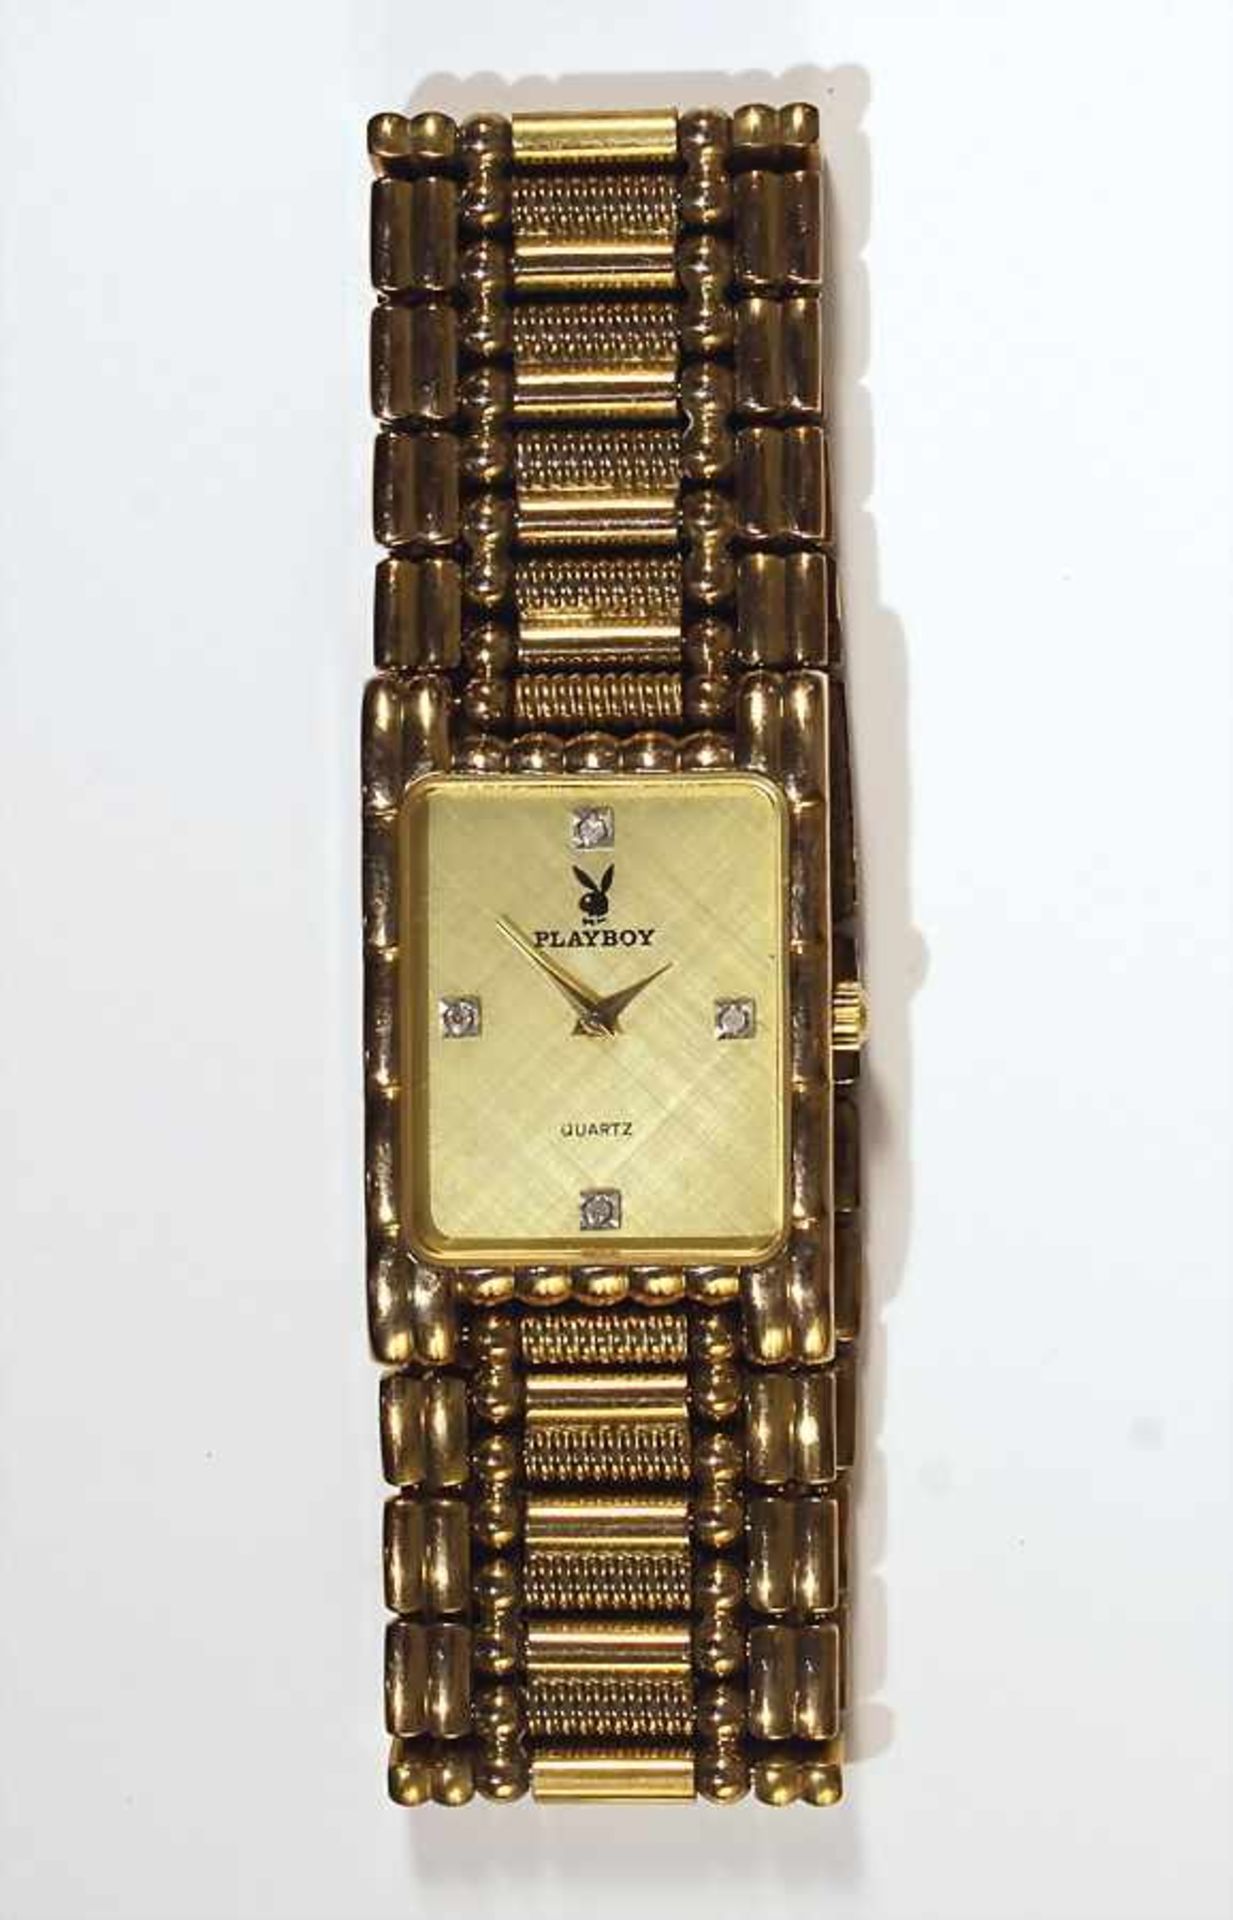 Herren-Armbanduhr, "PLAYBOY", Quarz, Plaque, 4 kl. Diamanten, L. = 18,0 cm Plus Ersatzglieder (3,0